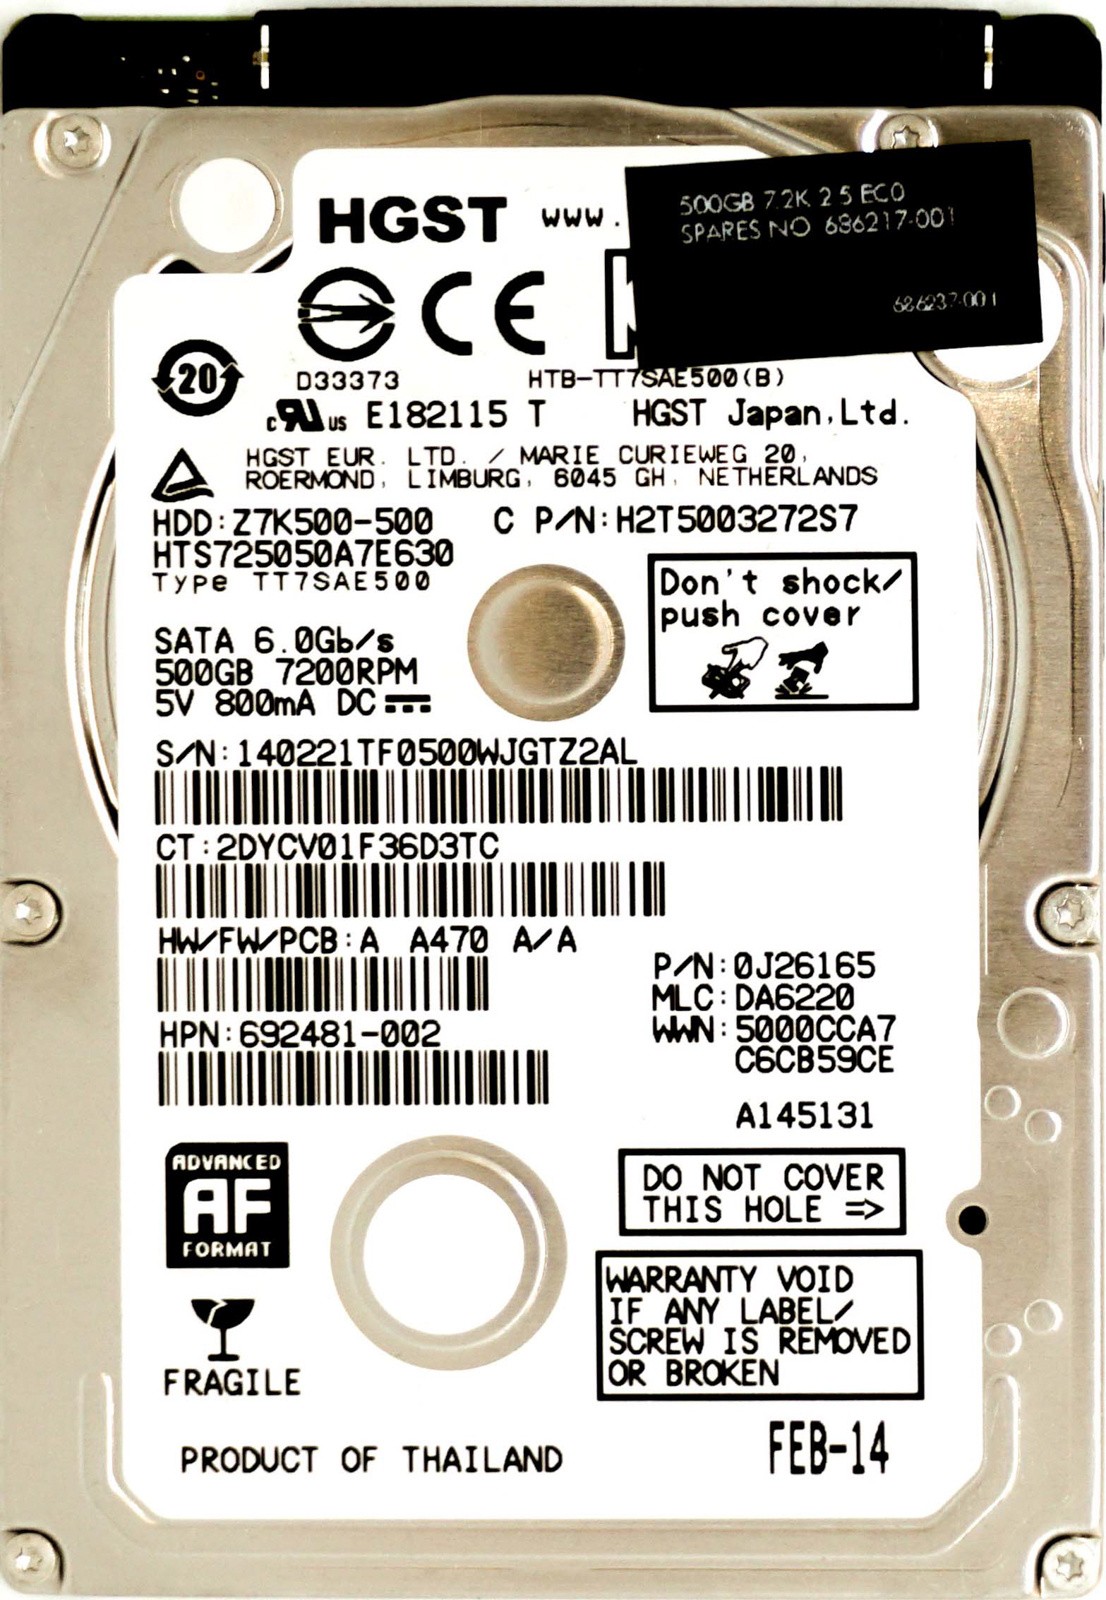 HP (692481-002) 500GB SATA III (SFF) 6Gb/s 7.2K HDD